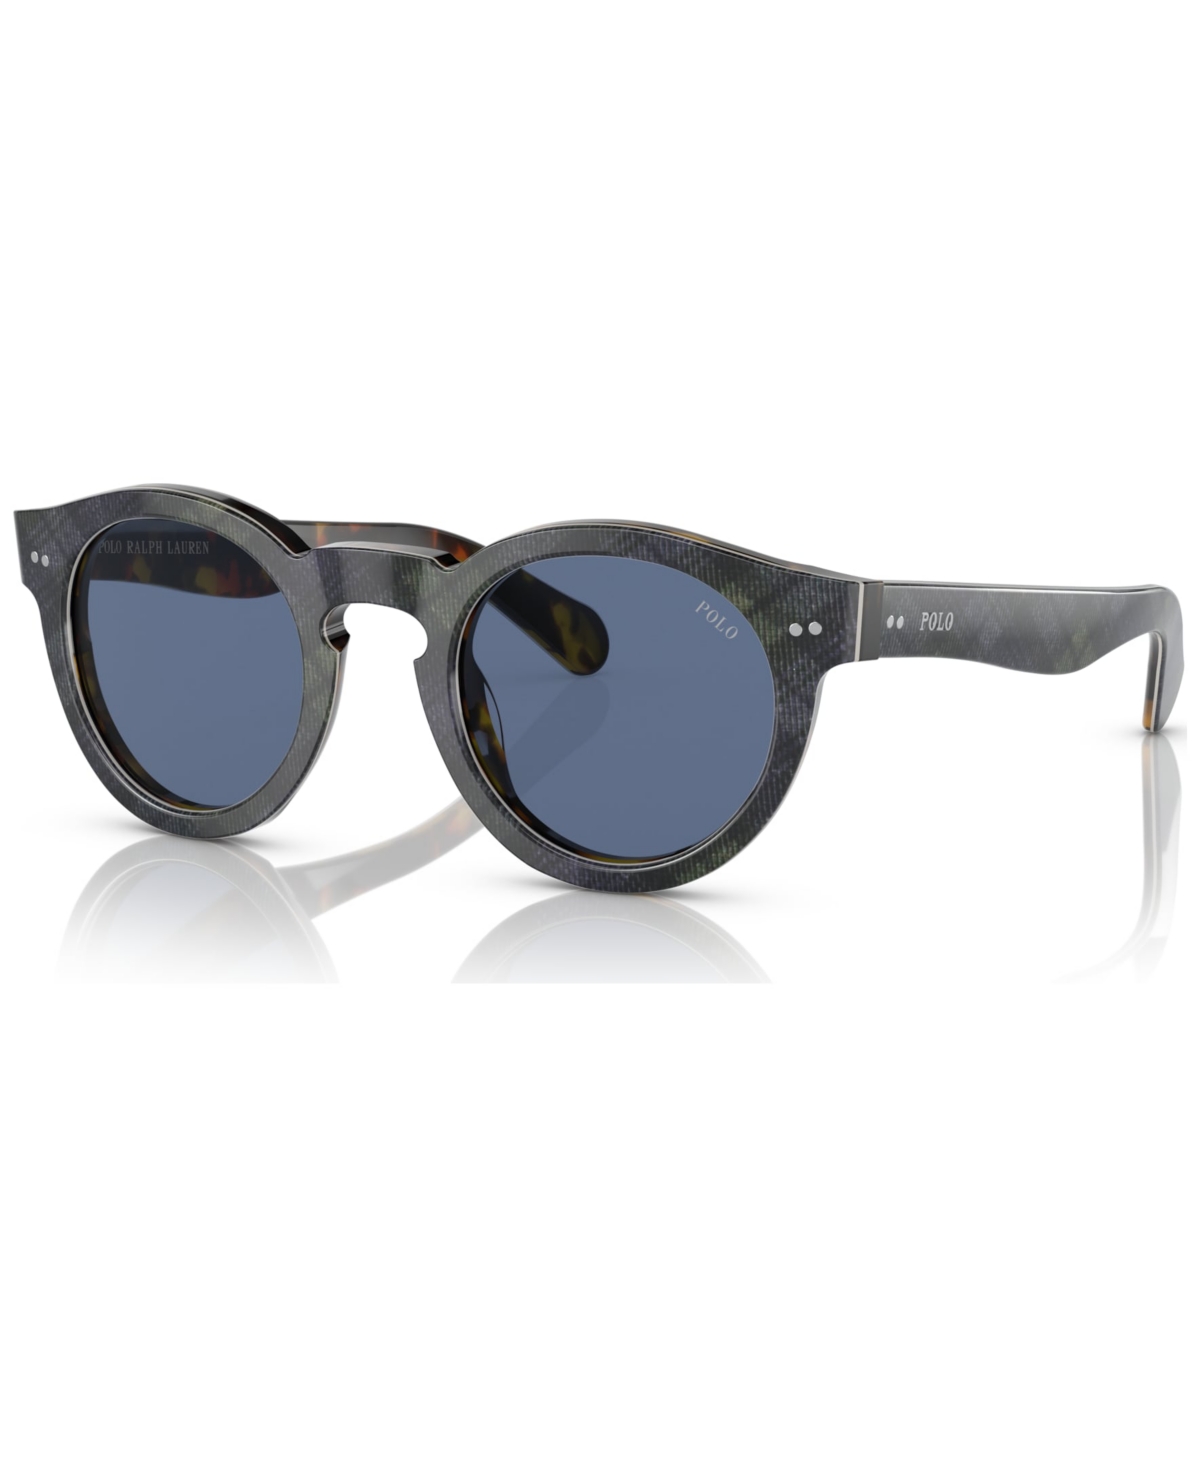 Polo Ralph Lauren Men's Sunglasses, Ph416546-x 46 In Shiny Black Watch On H. Jerry